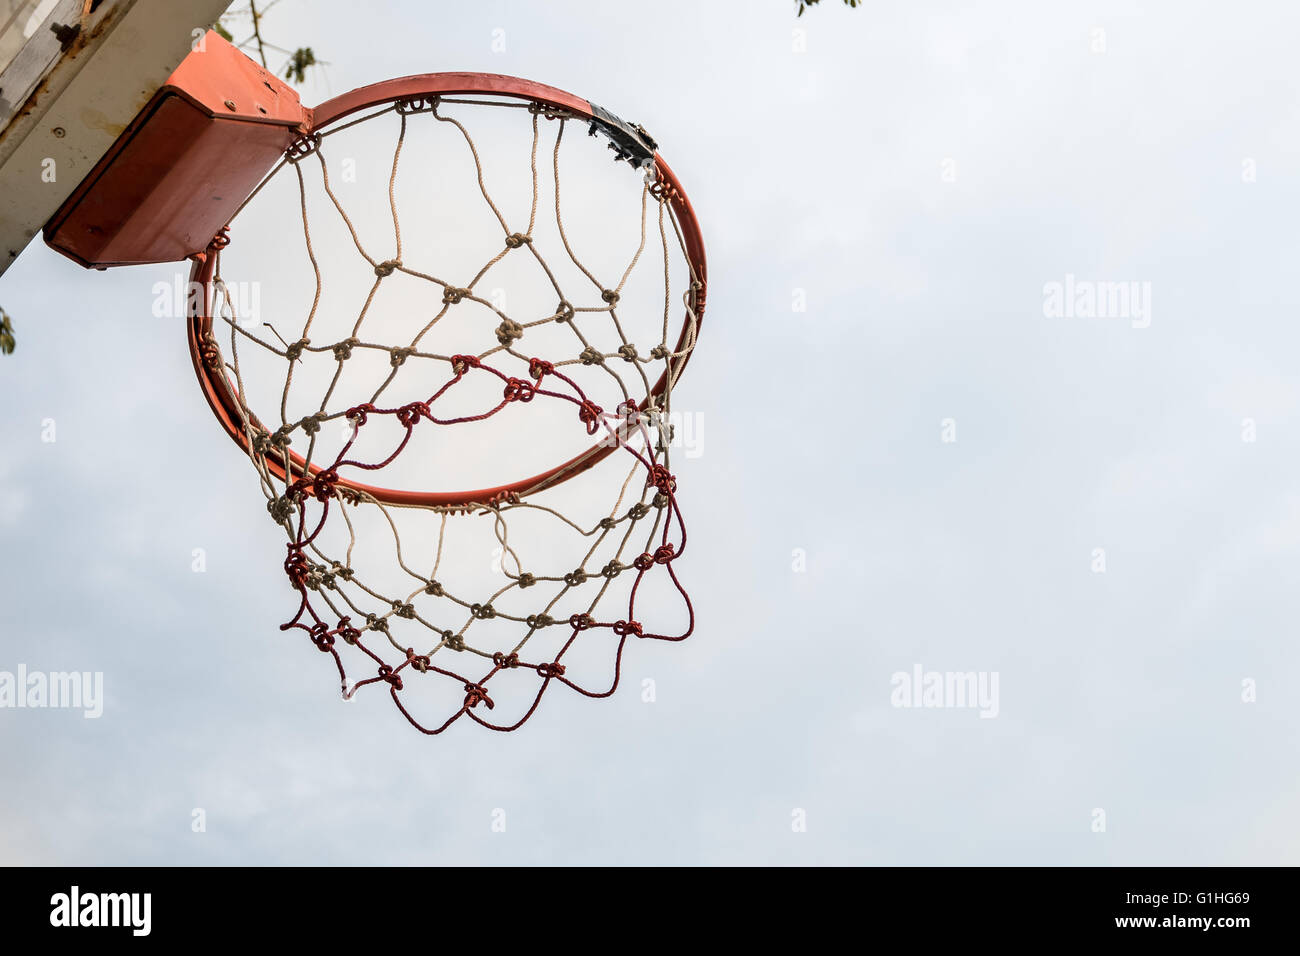 A basketball hoop with a nice sky. Stock Photo